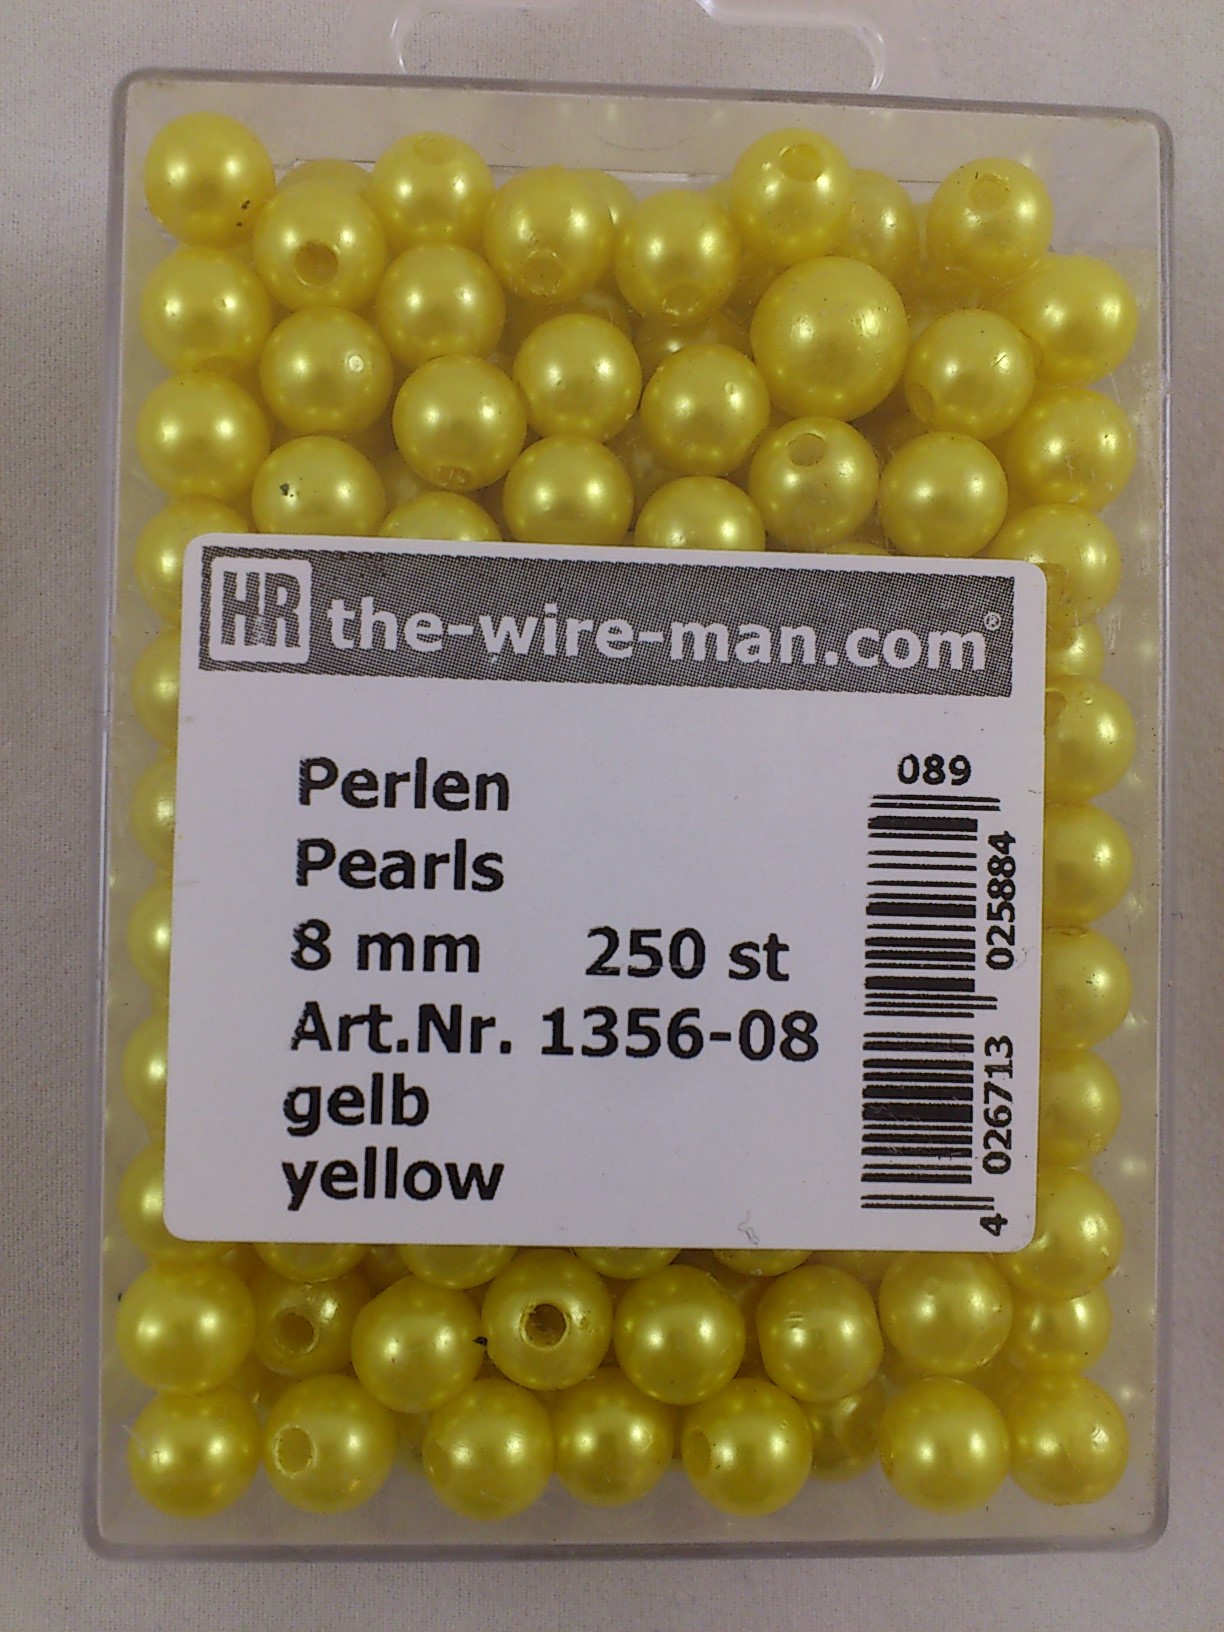 Perlen gelb 8 mm. 250 st.